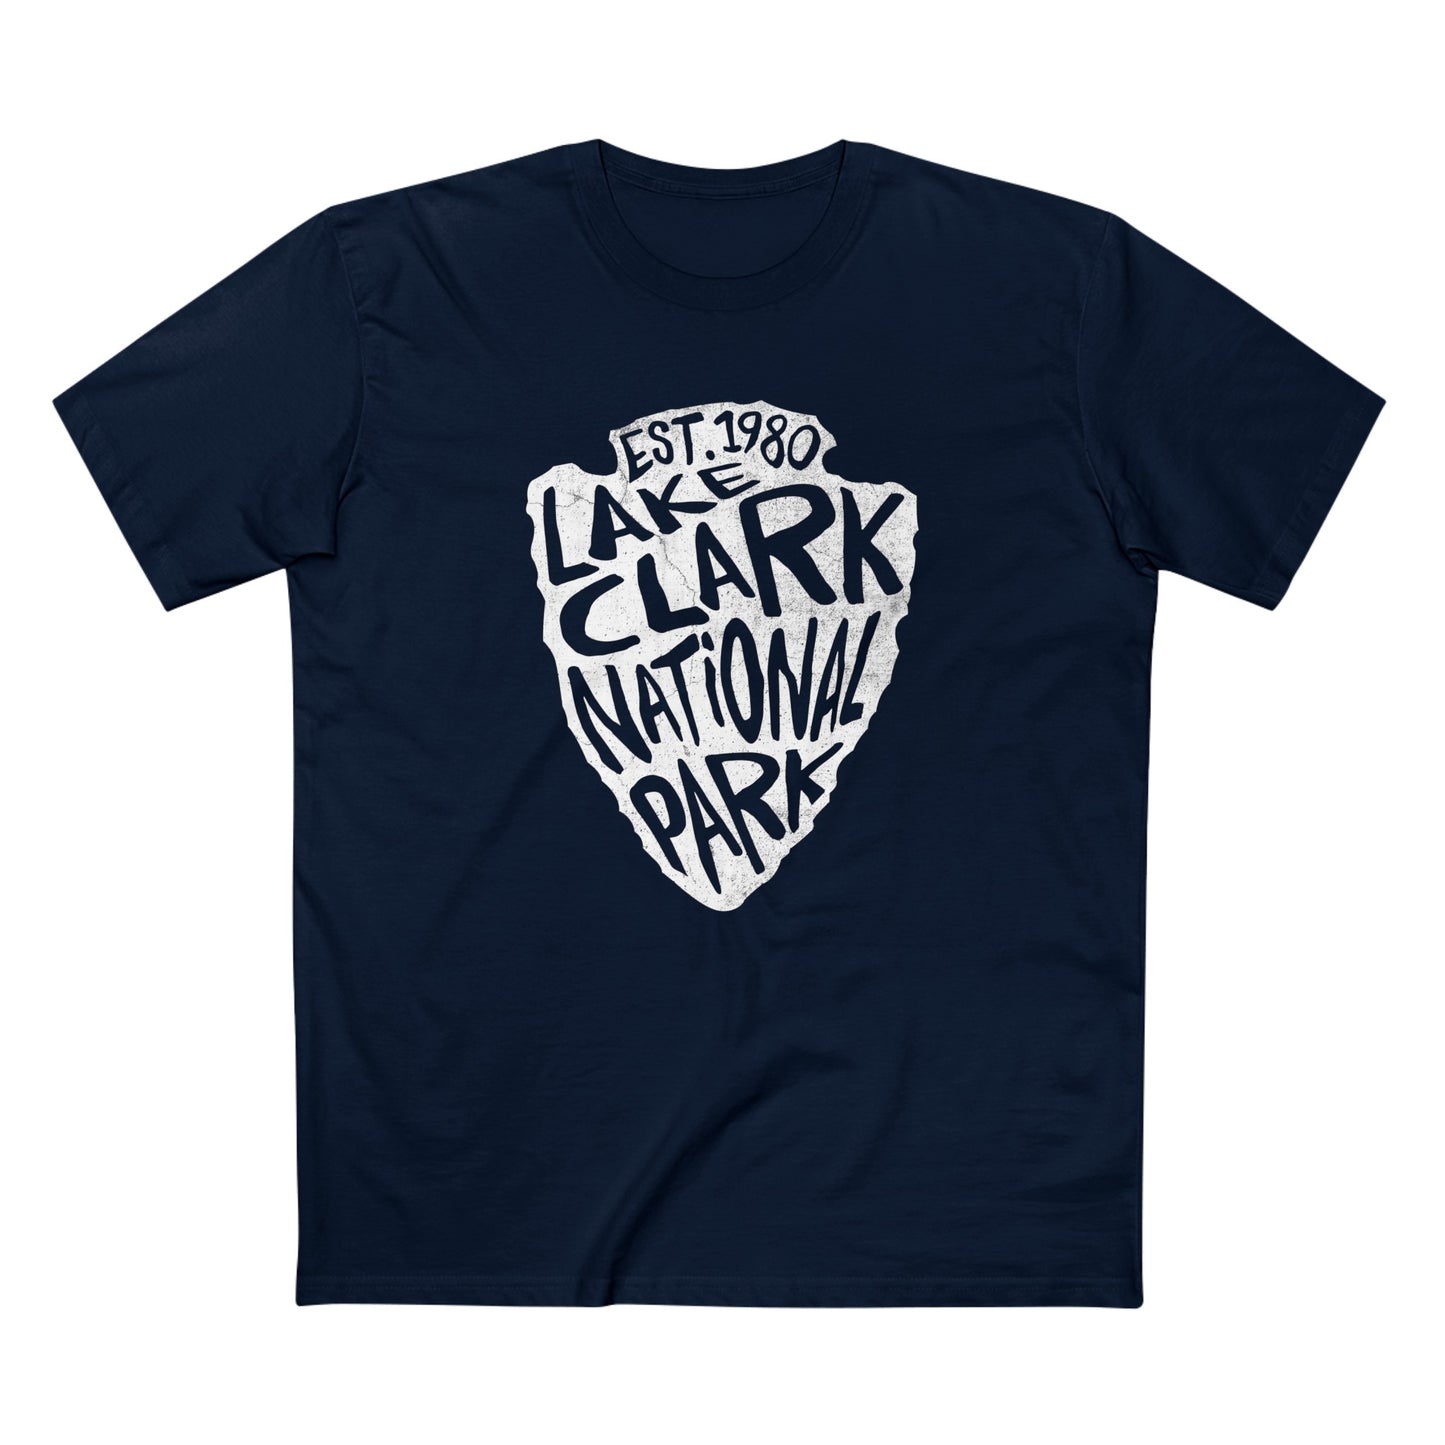 Lake Clark National Park T-Shirt - Arrowhead Design